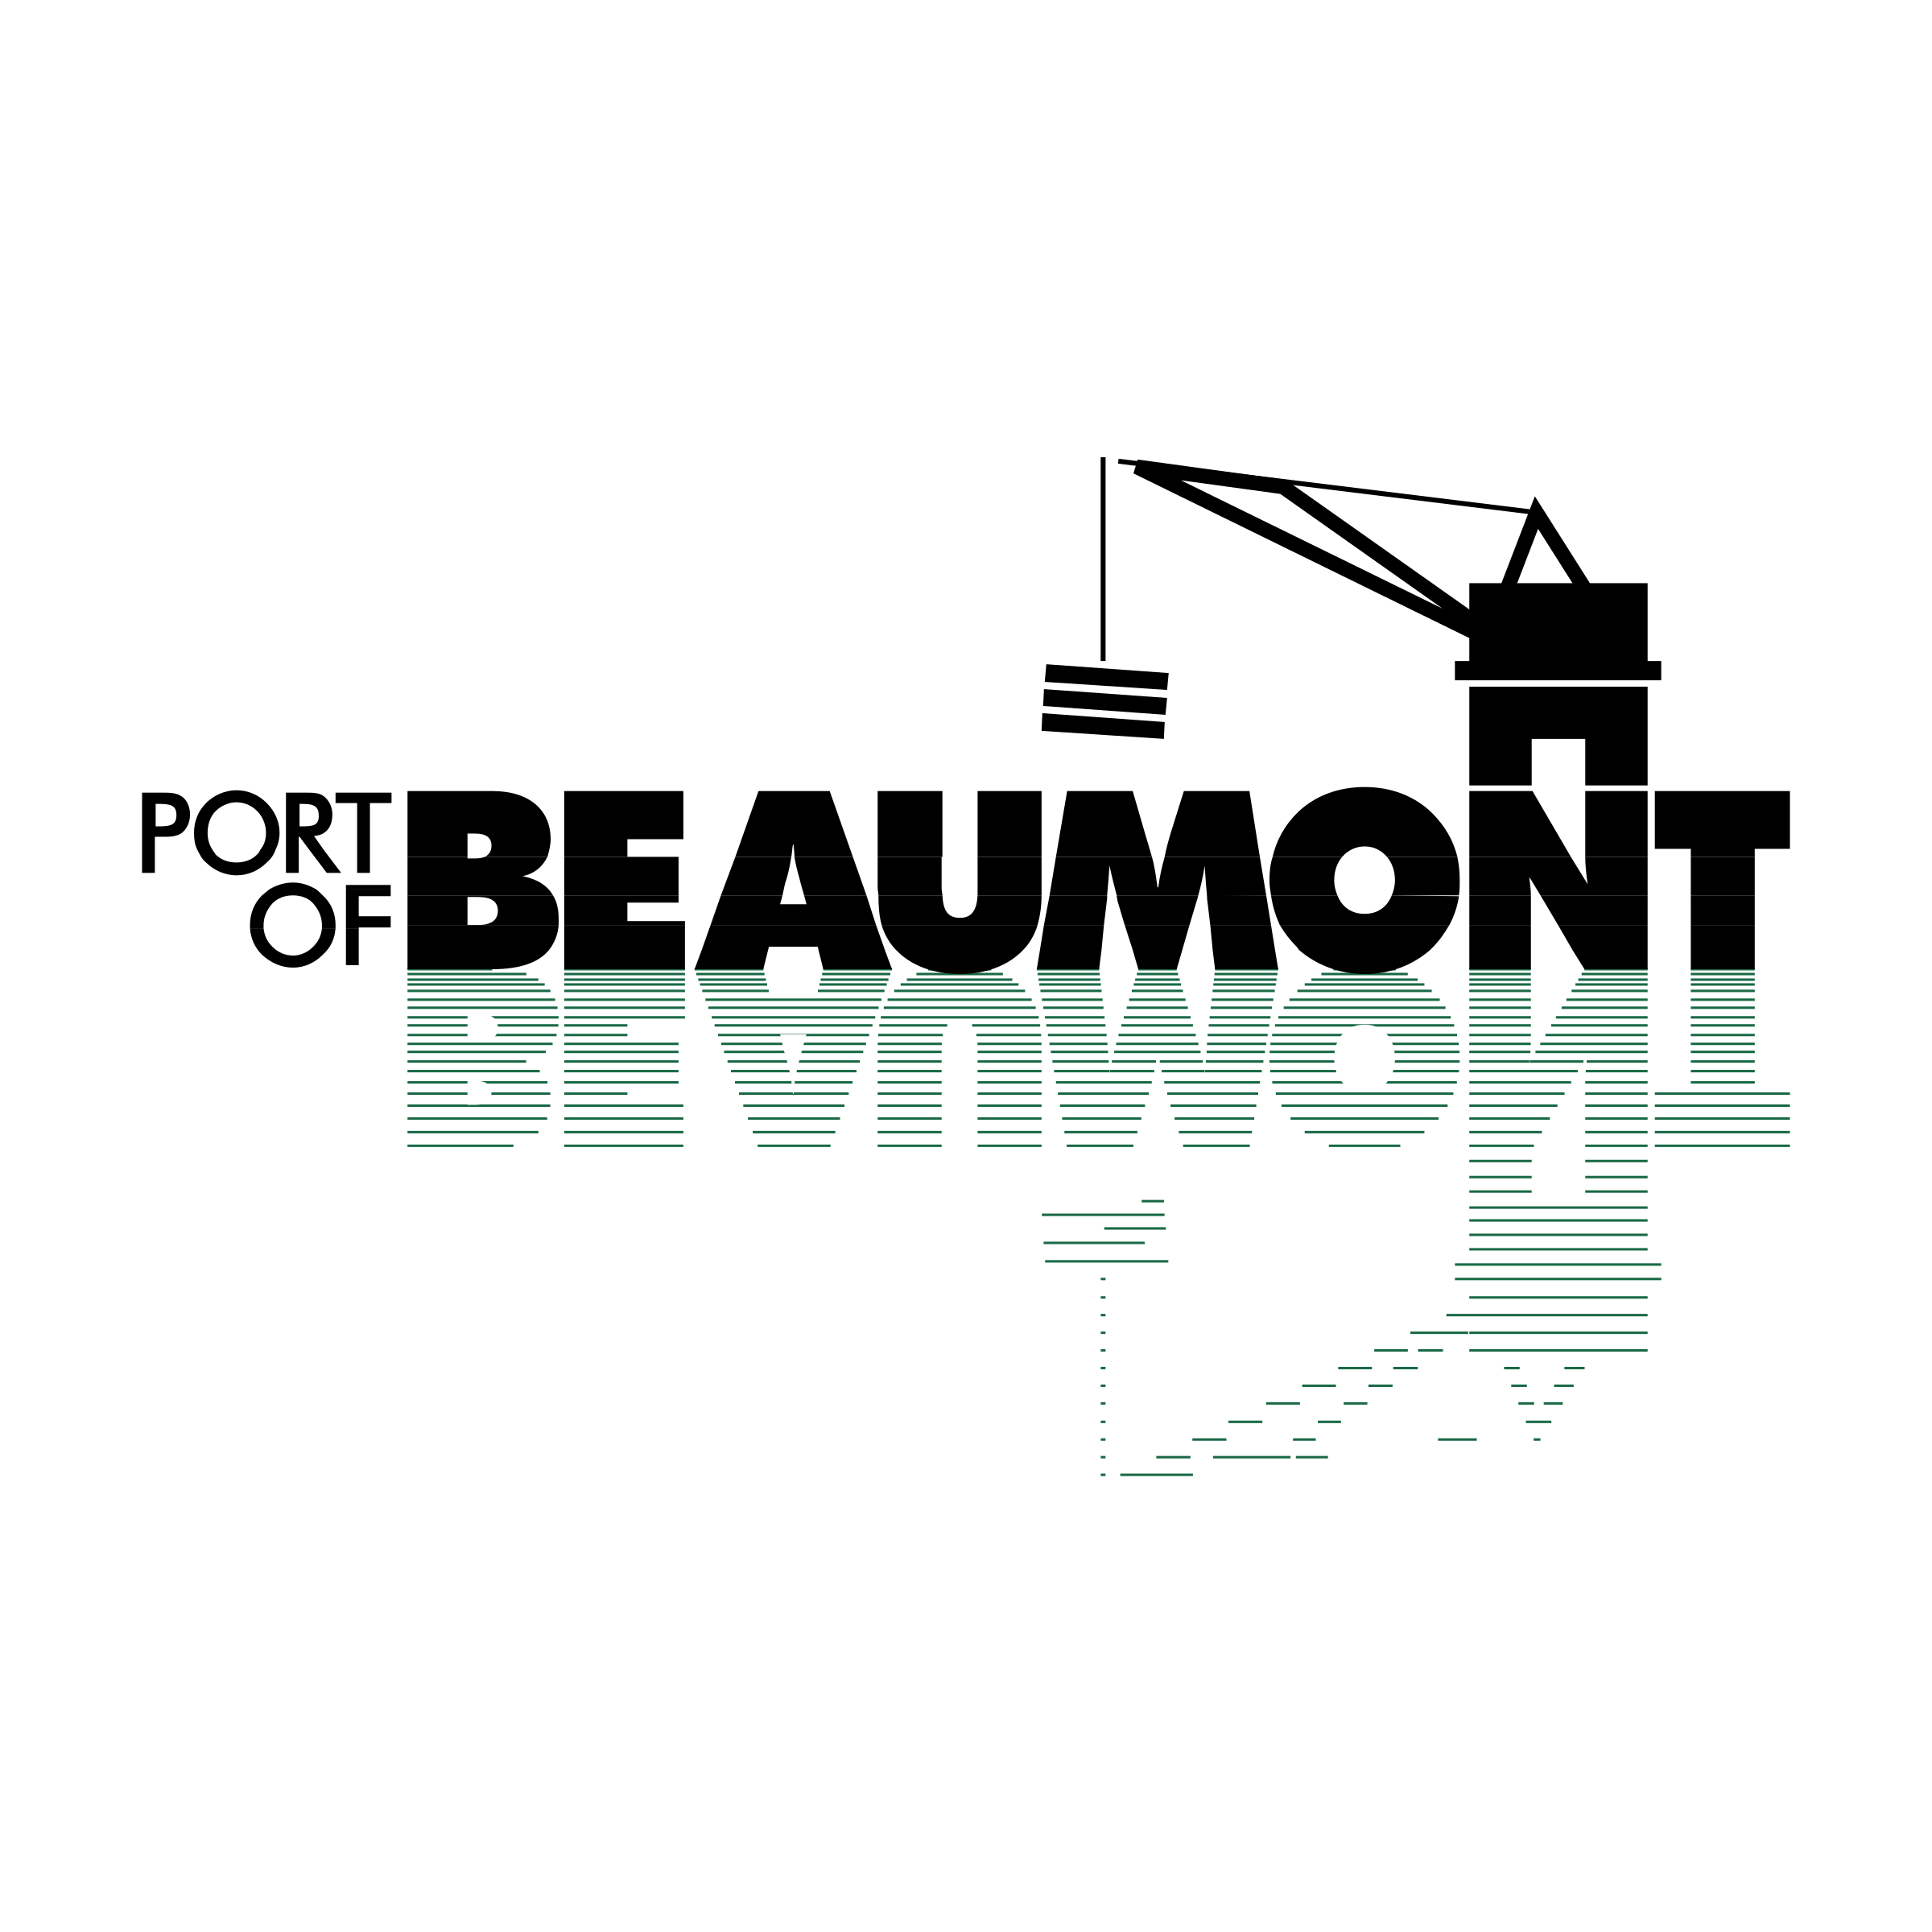 Beaumont Logo - Port of Beaumont Logo PNG Transparent & SVG Vector